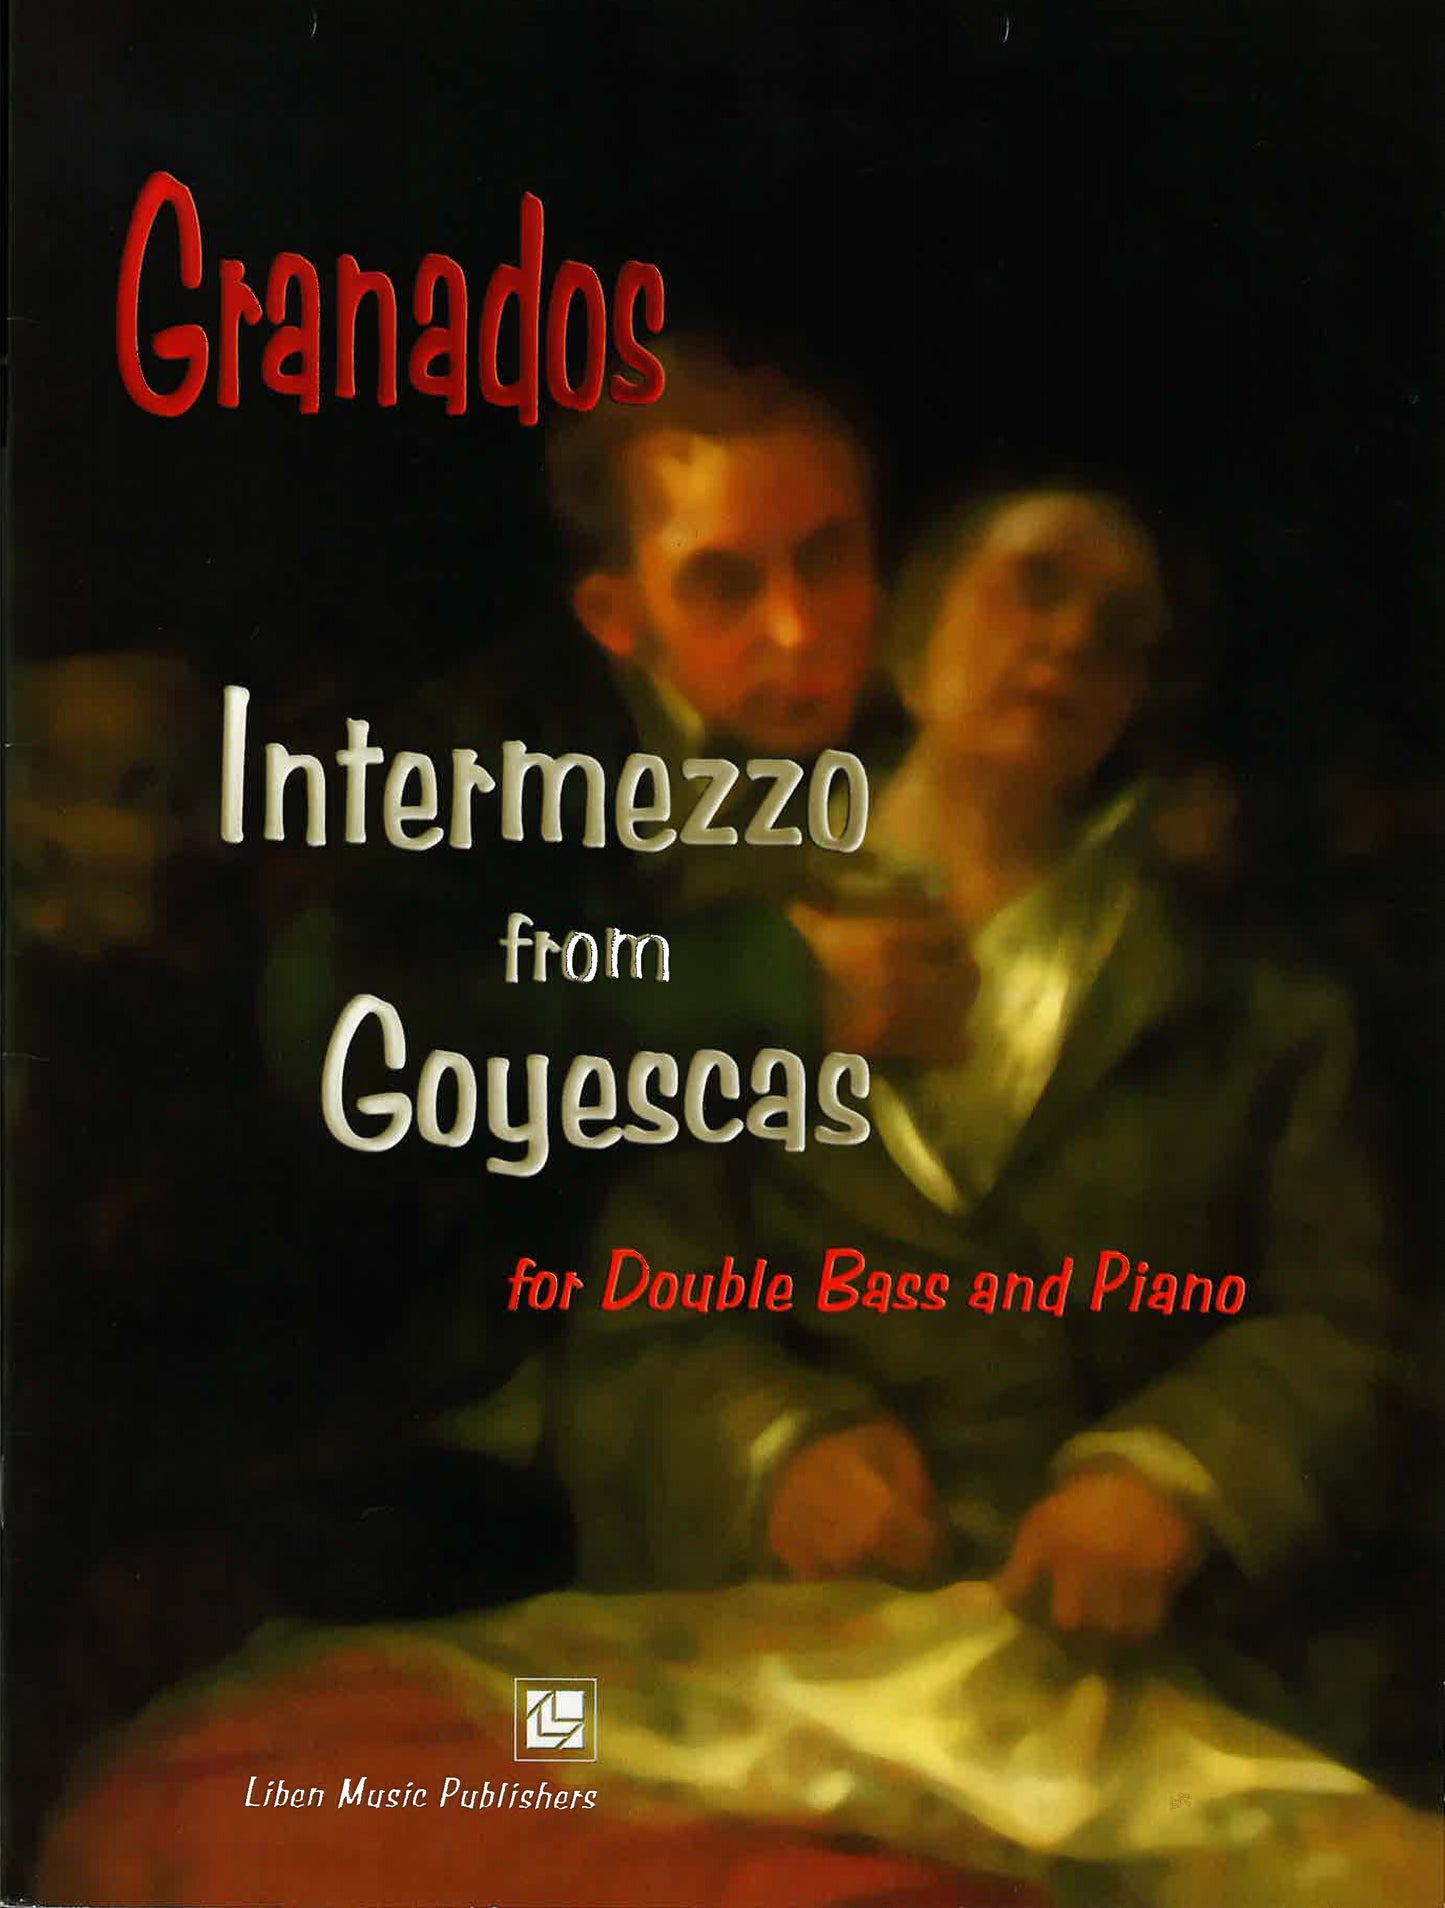 Granados: Intermezzo from Goyescas